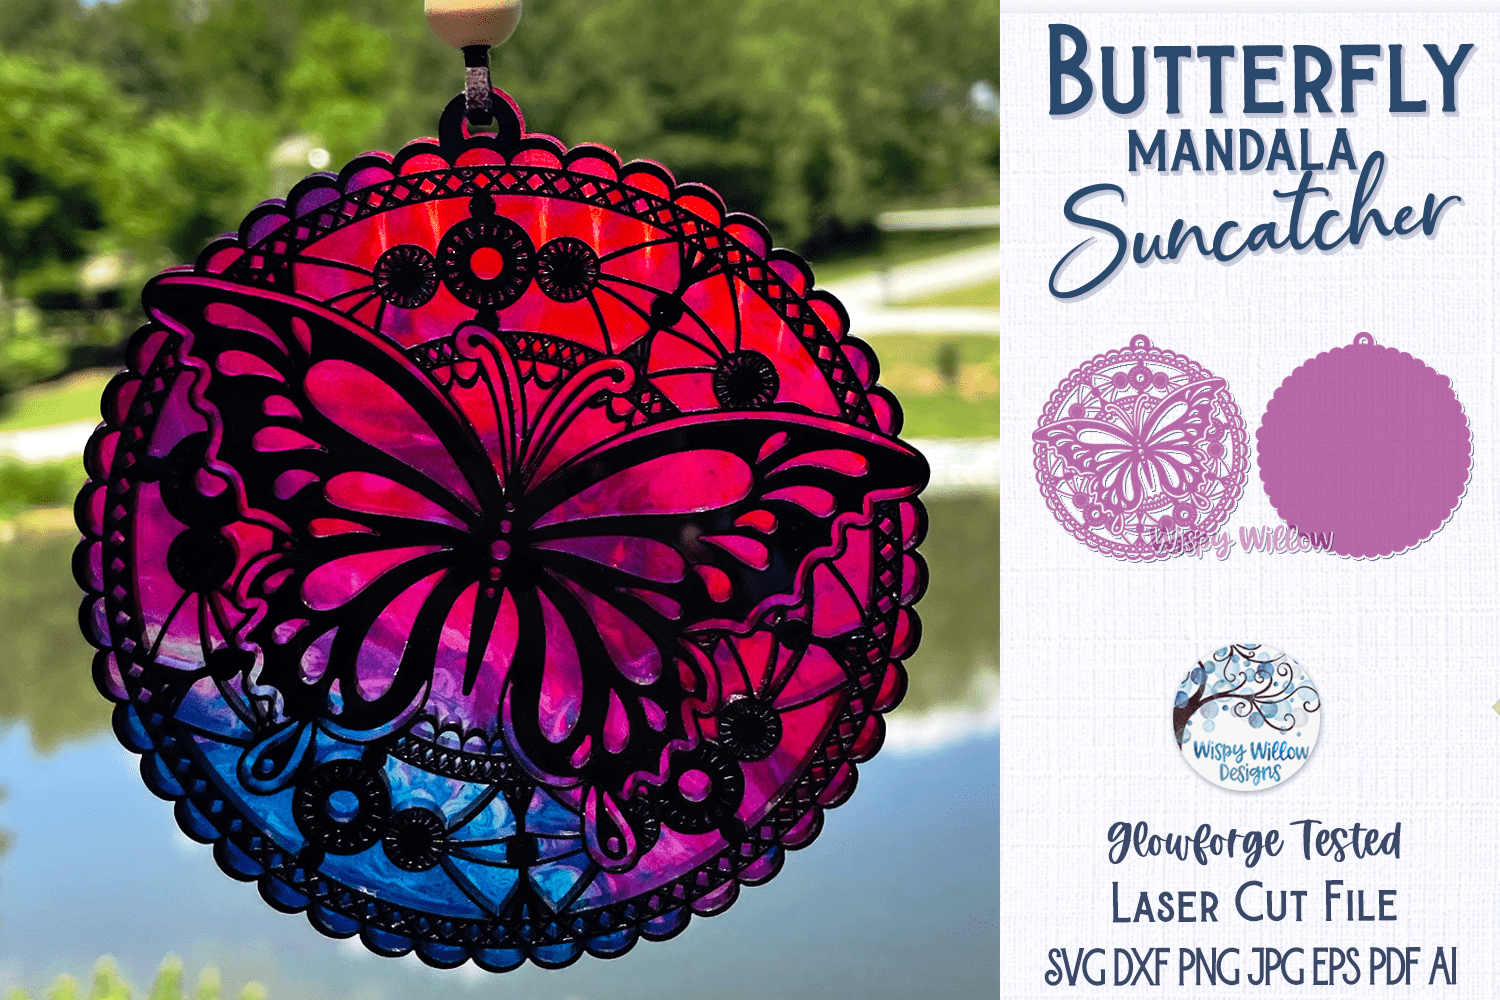 Butterfly Mandala Suncatcher for Laser or Glowforge Wispy Willow Designs Company